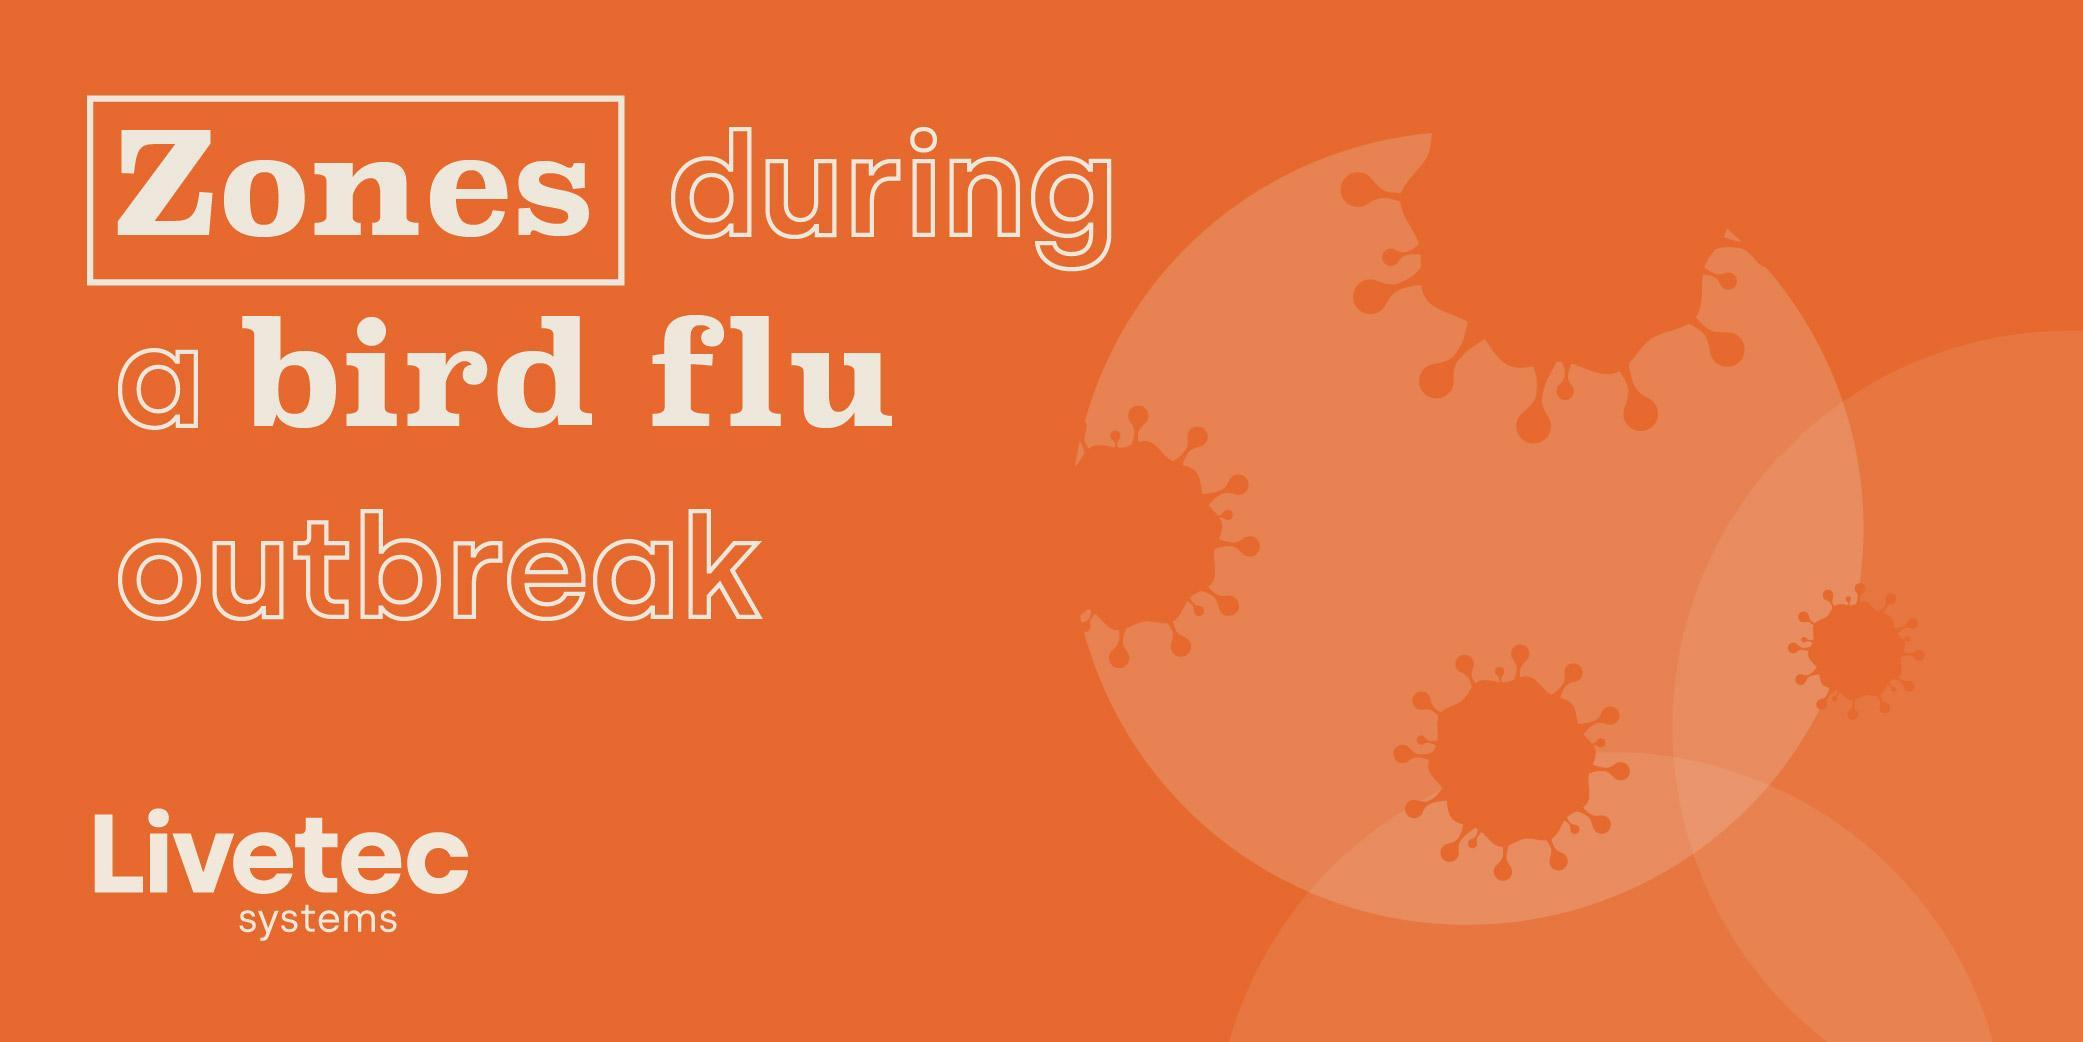 Zones during a bird flu outbreak blog graphic